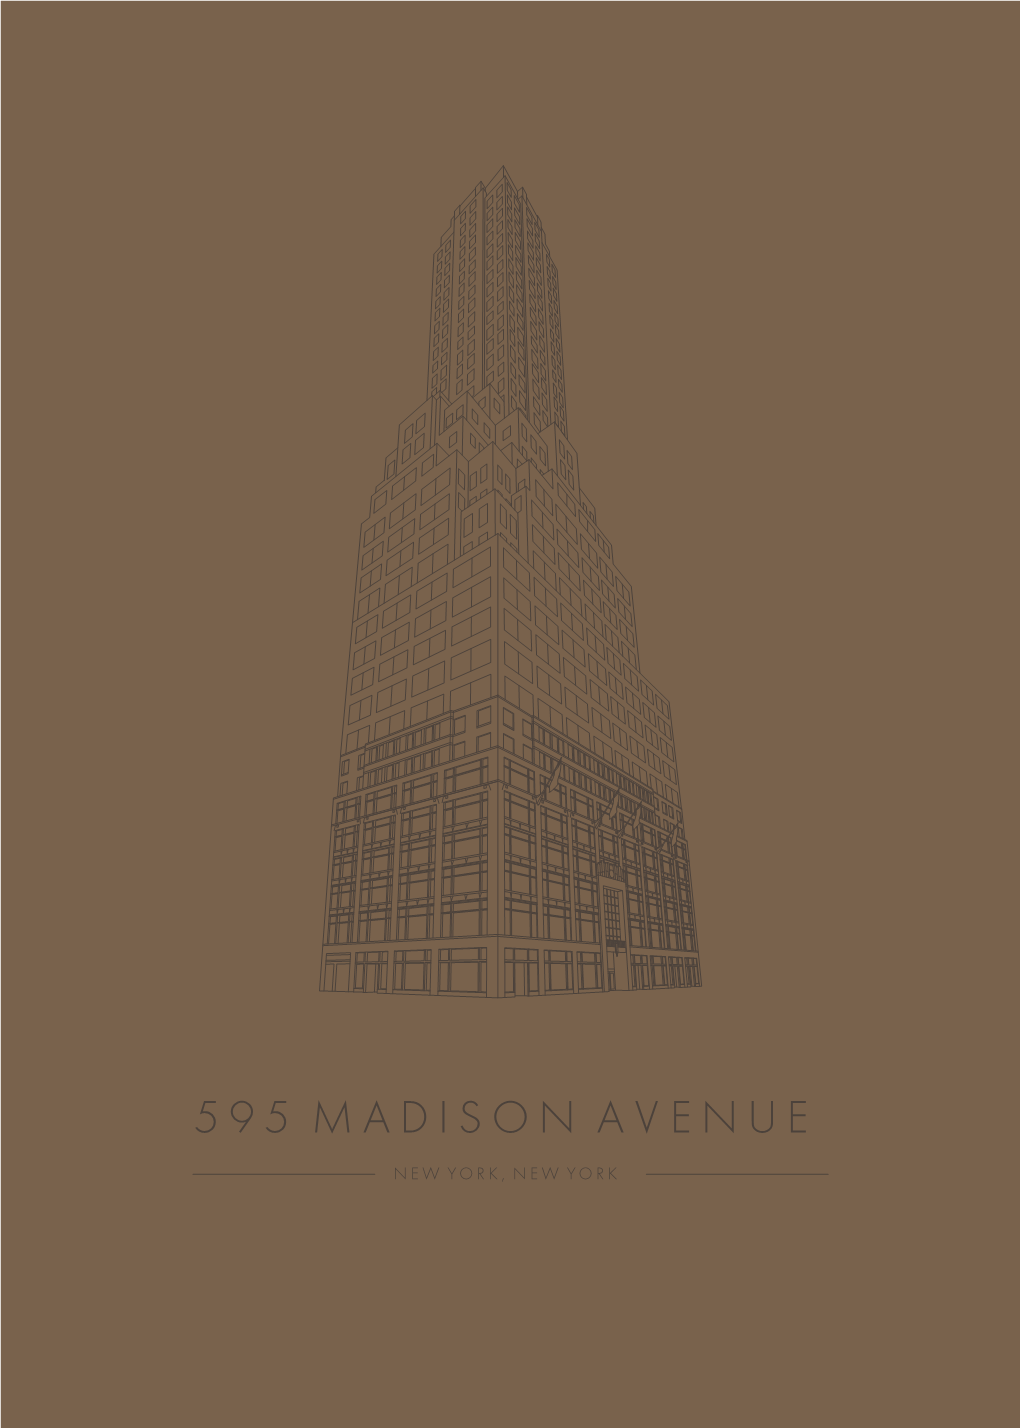 595 Madison Avenue